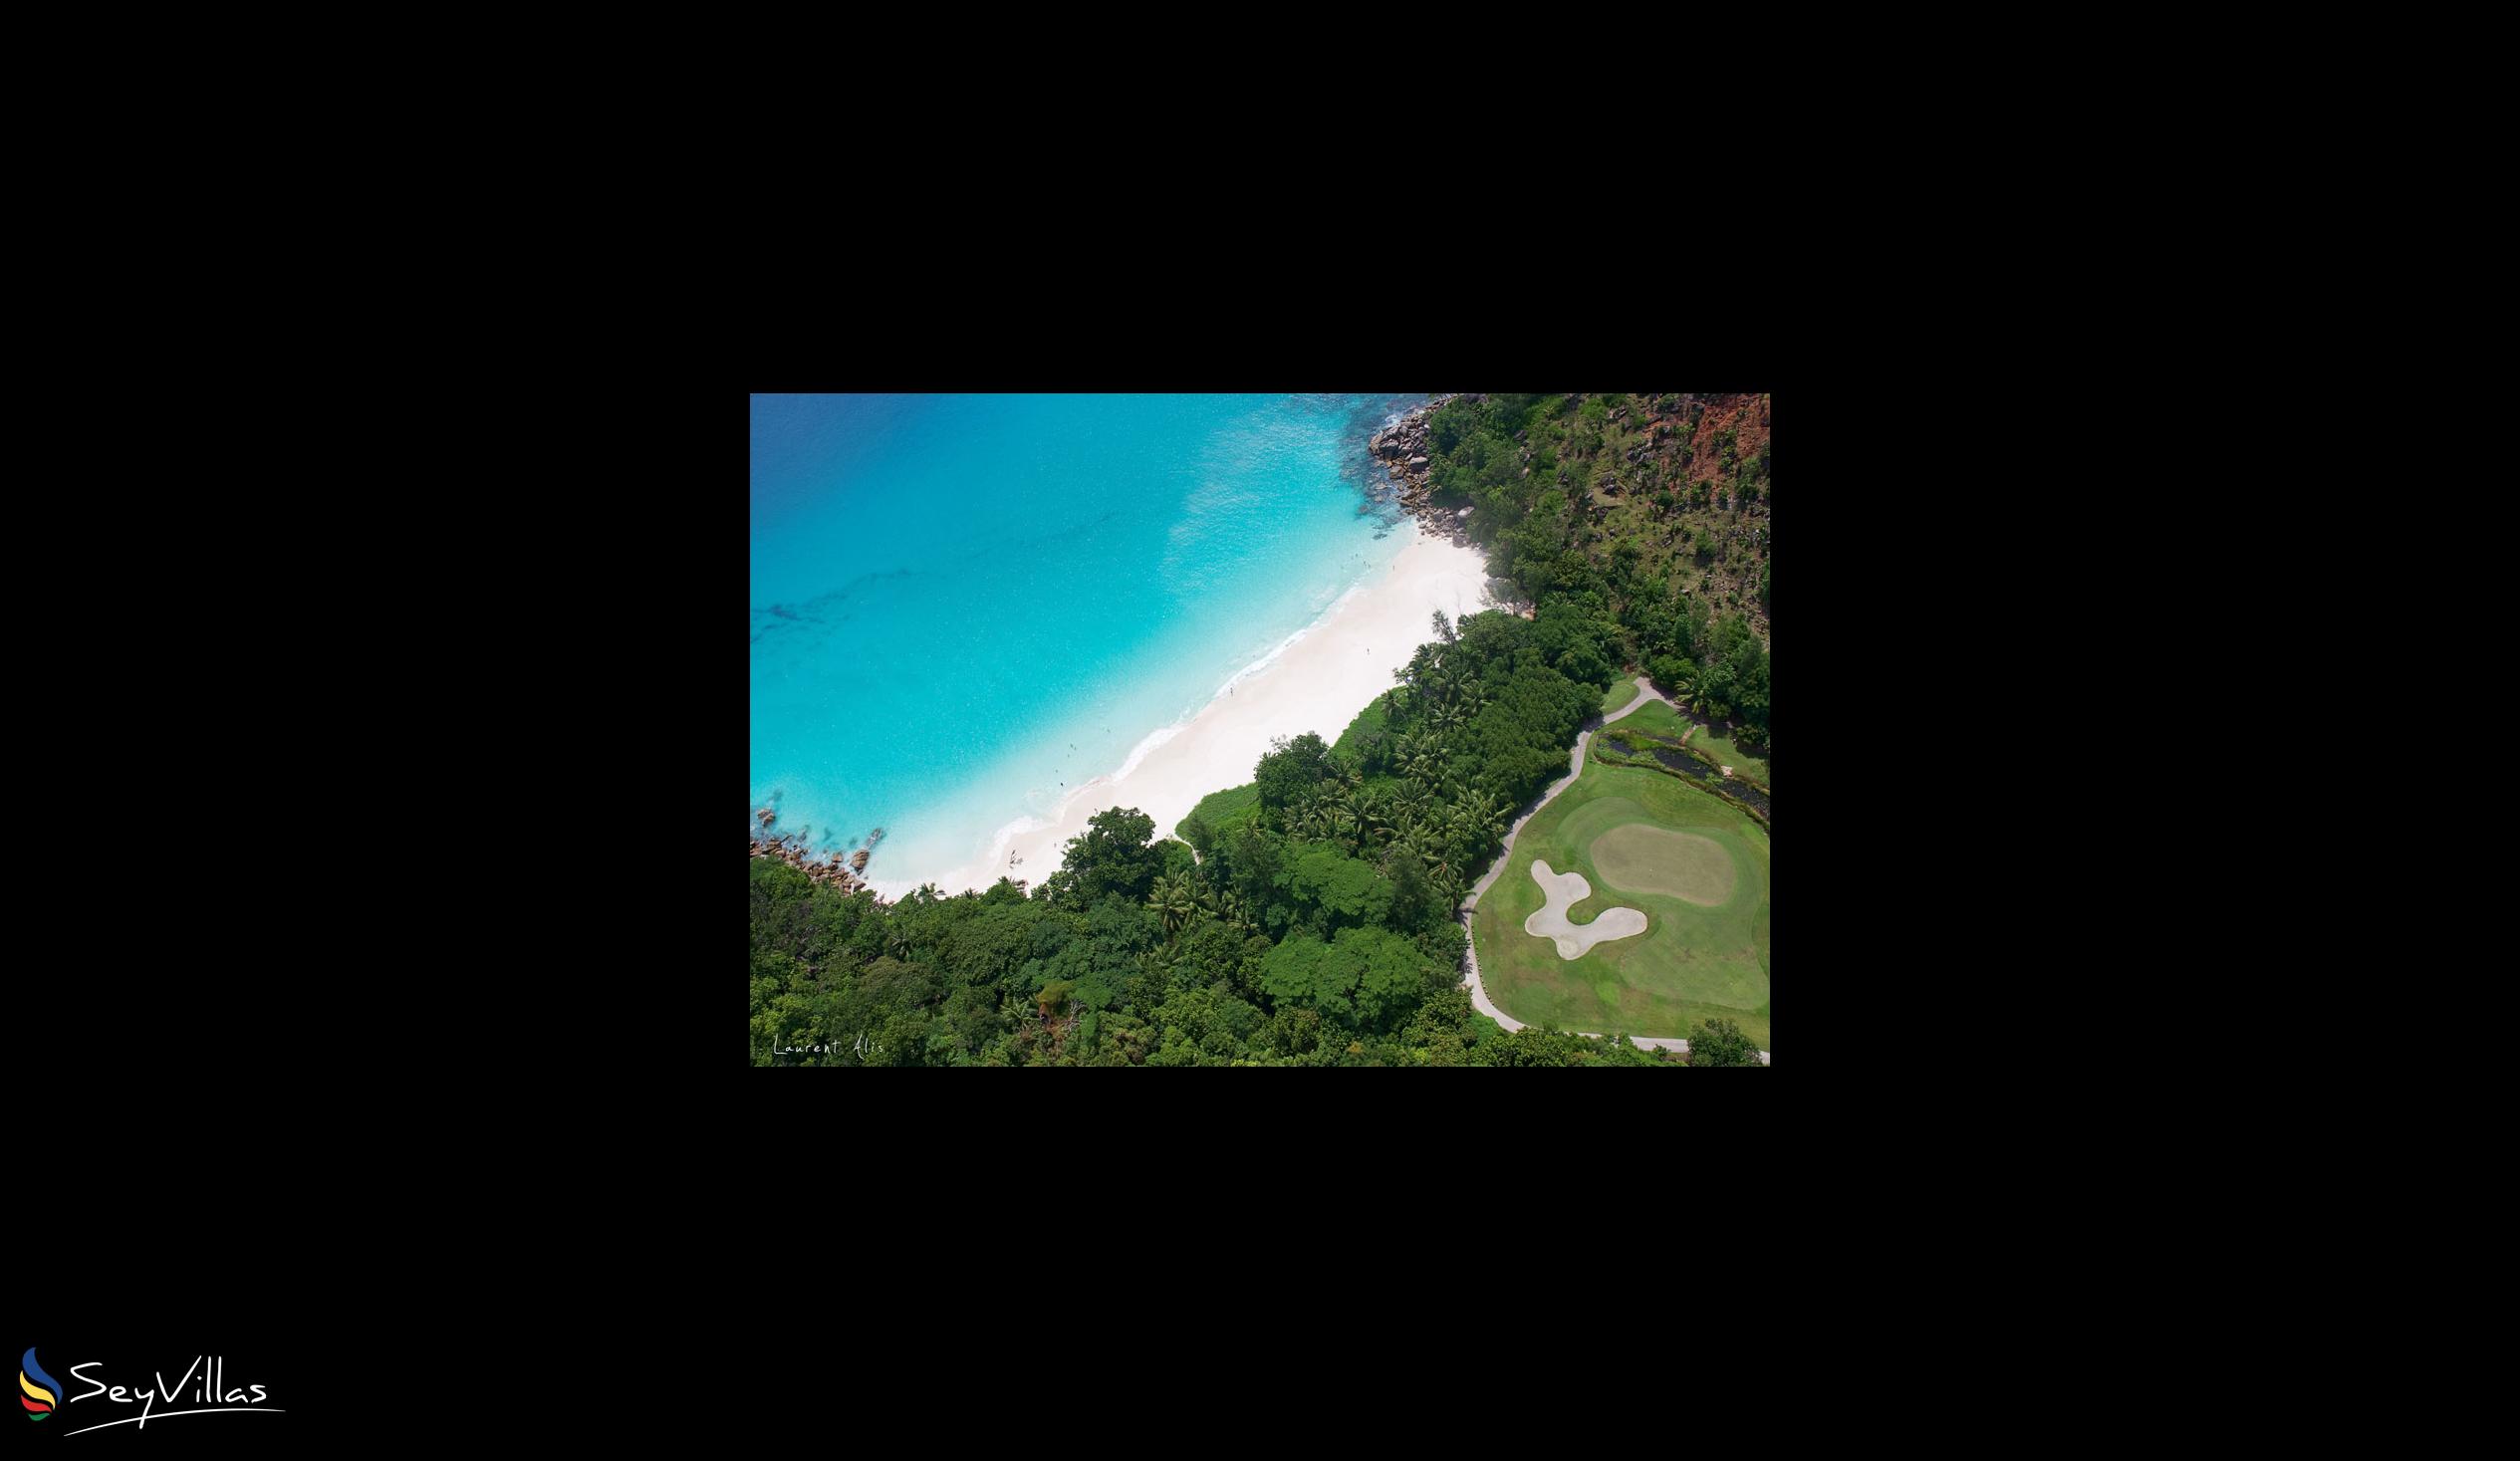 Photo 34: Silhouette Sea Pearl - Beaches - Seychelles (Seychelles)